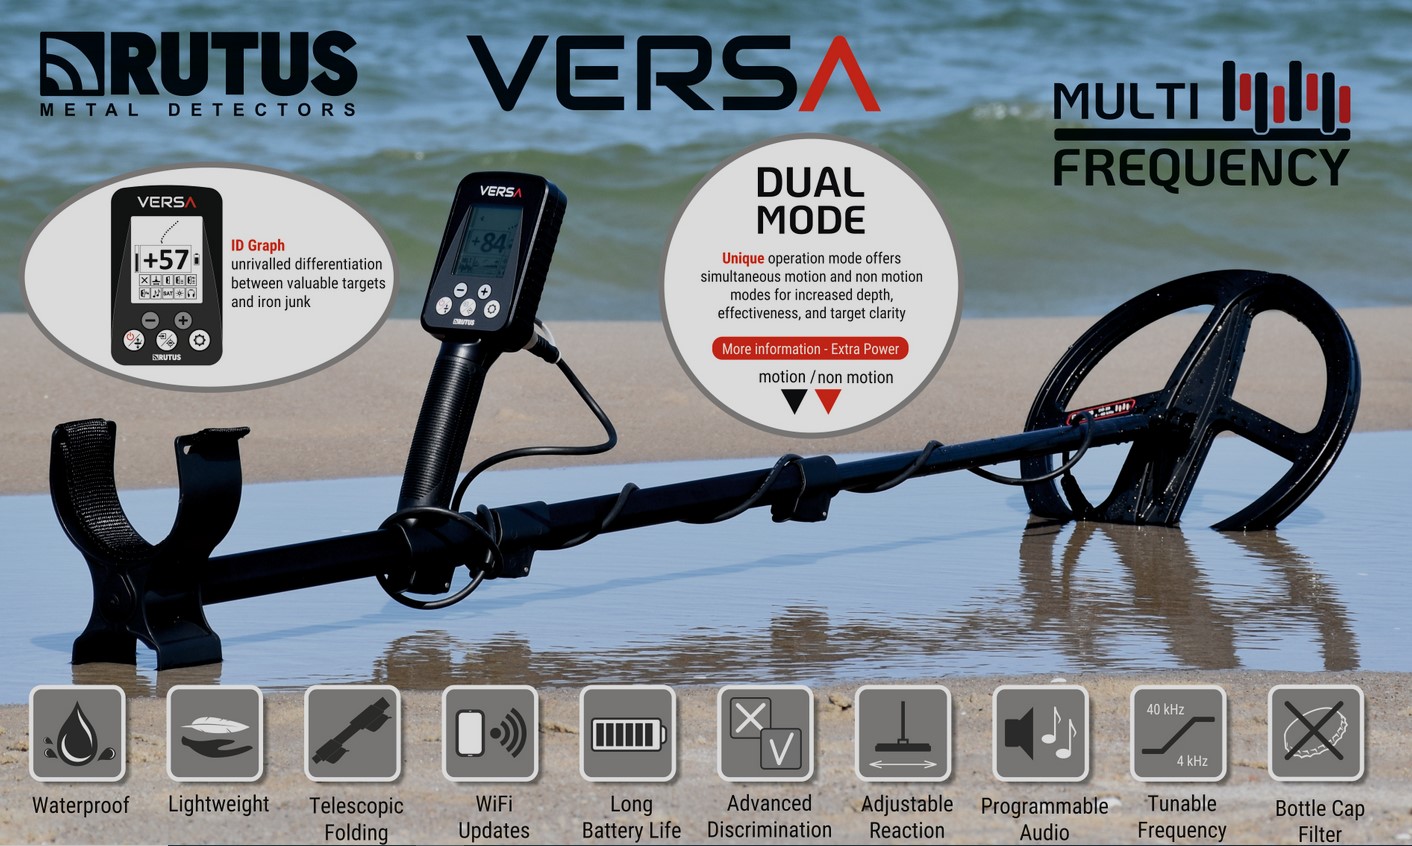 Rutus Versa offre frequenze multiple e ricerca Dual Mode